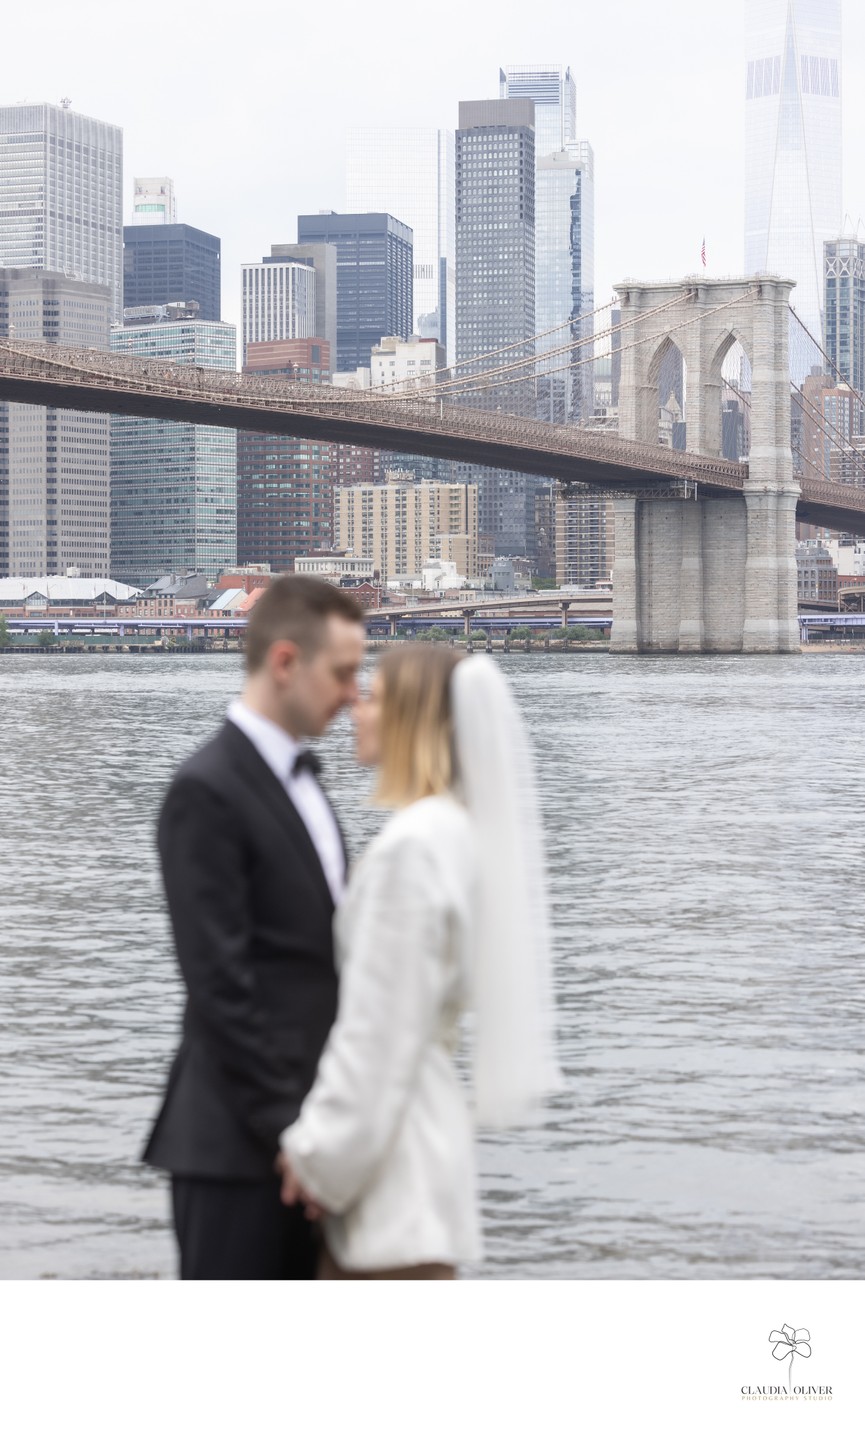 Engagement Photographer NYC: Brooklyn Bridge Park Photos